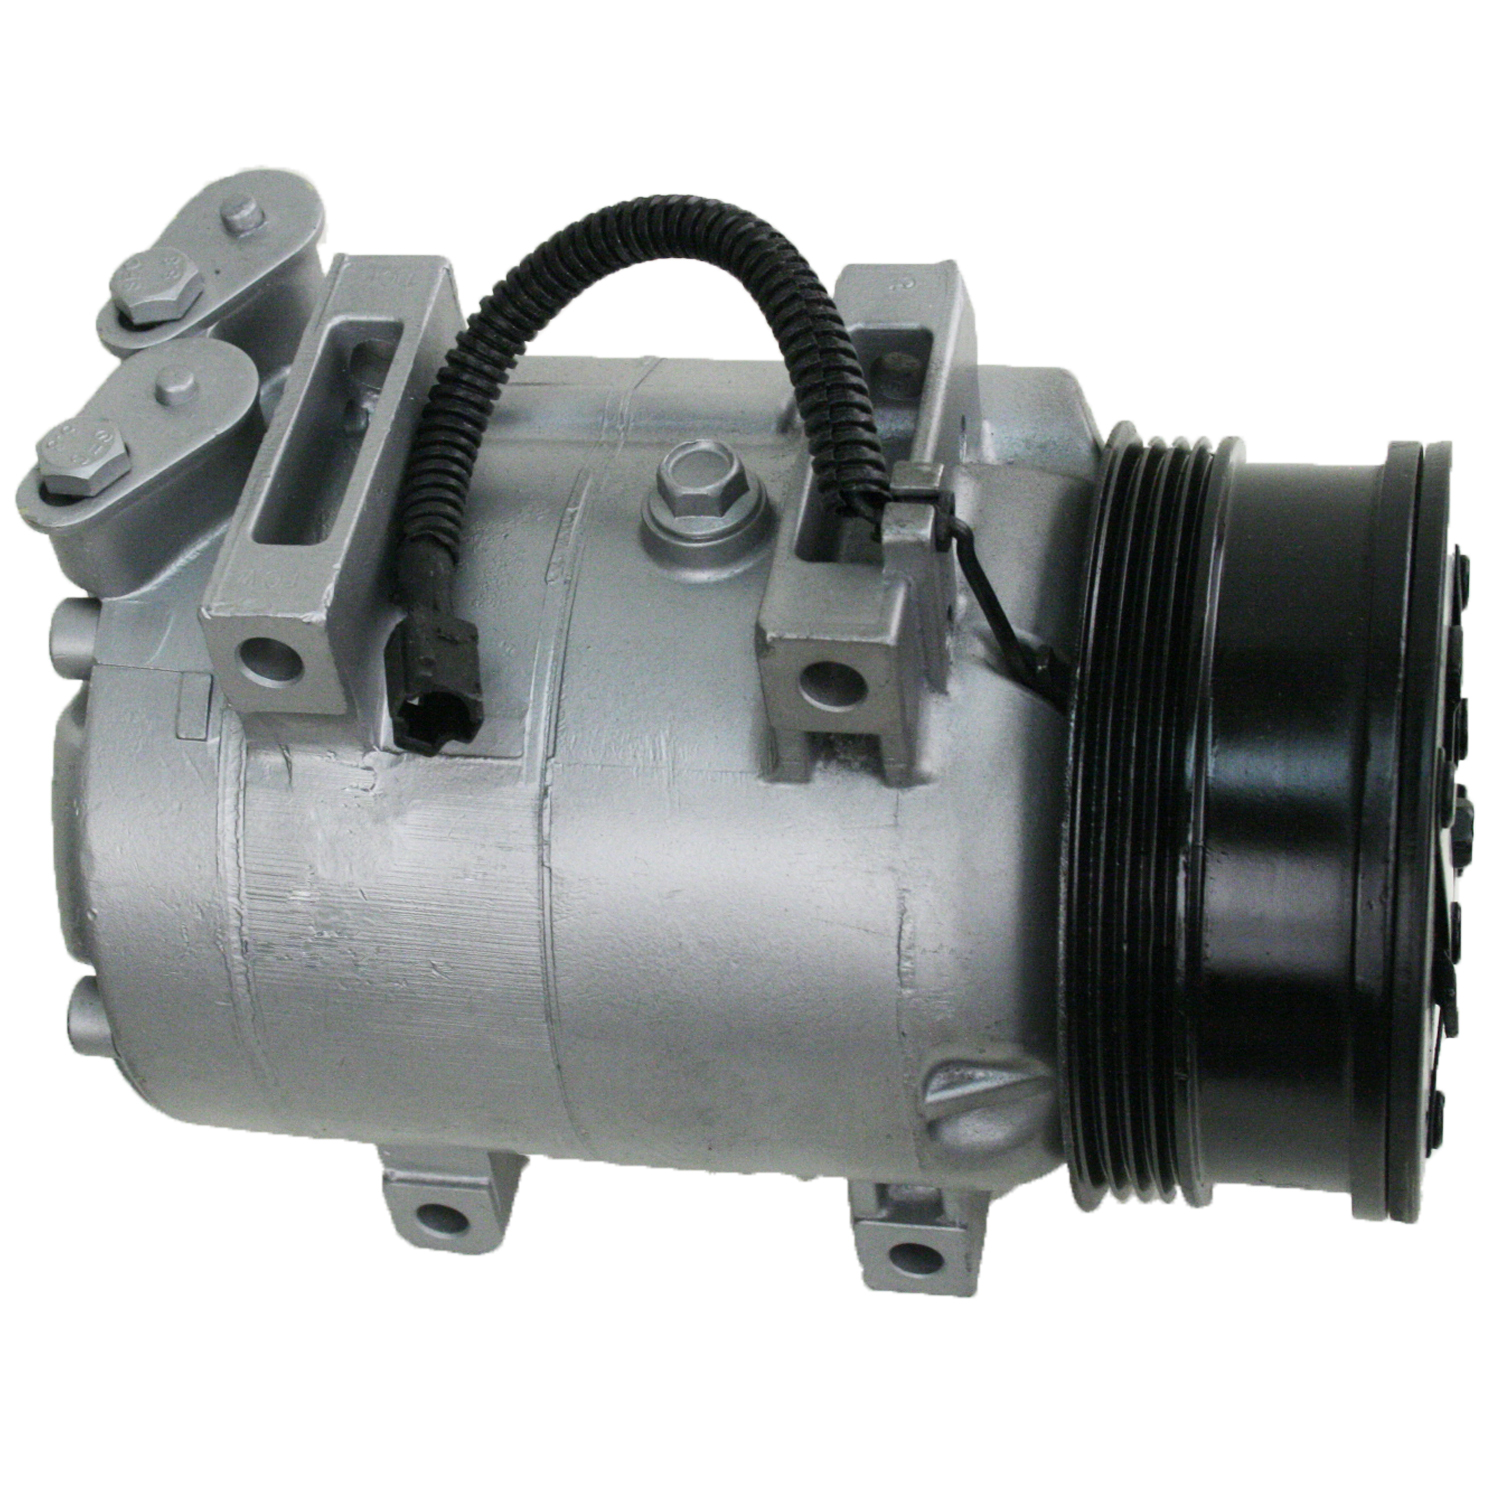 TCW Compressor 12500.401 Remanufactured Product Image field_60b6a13a6e67c